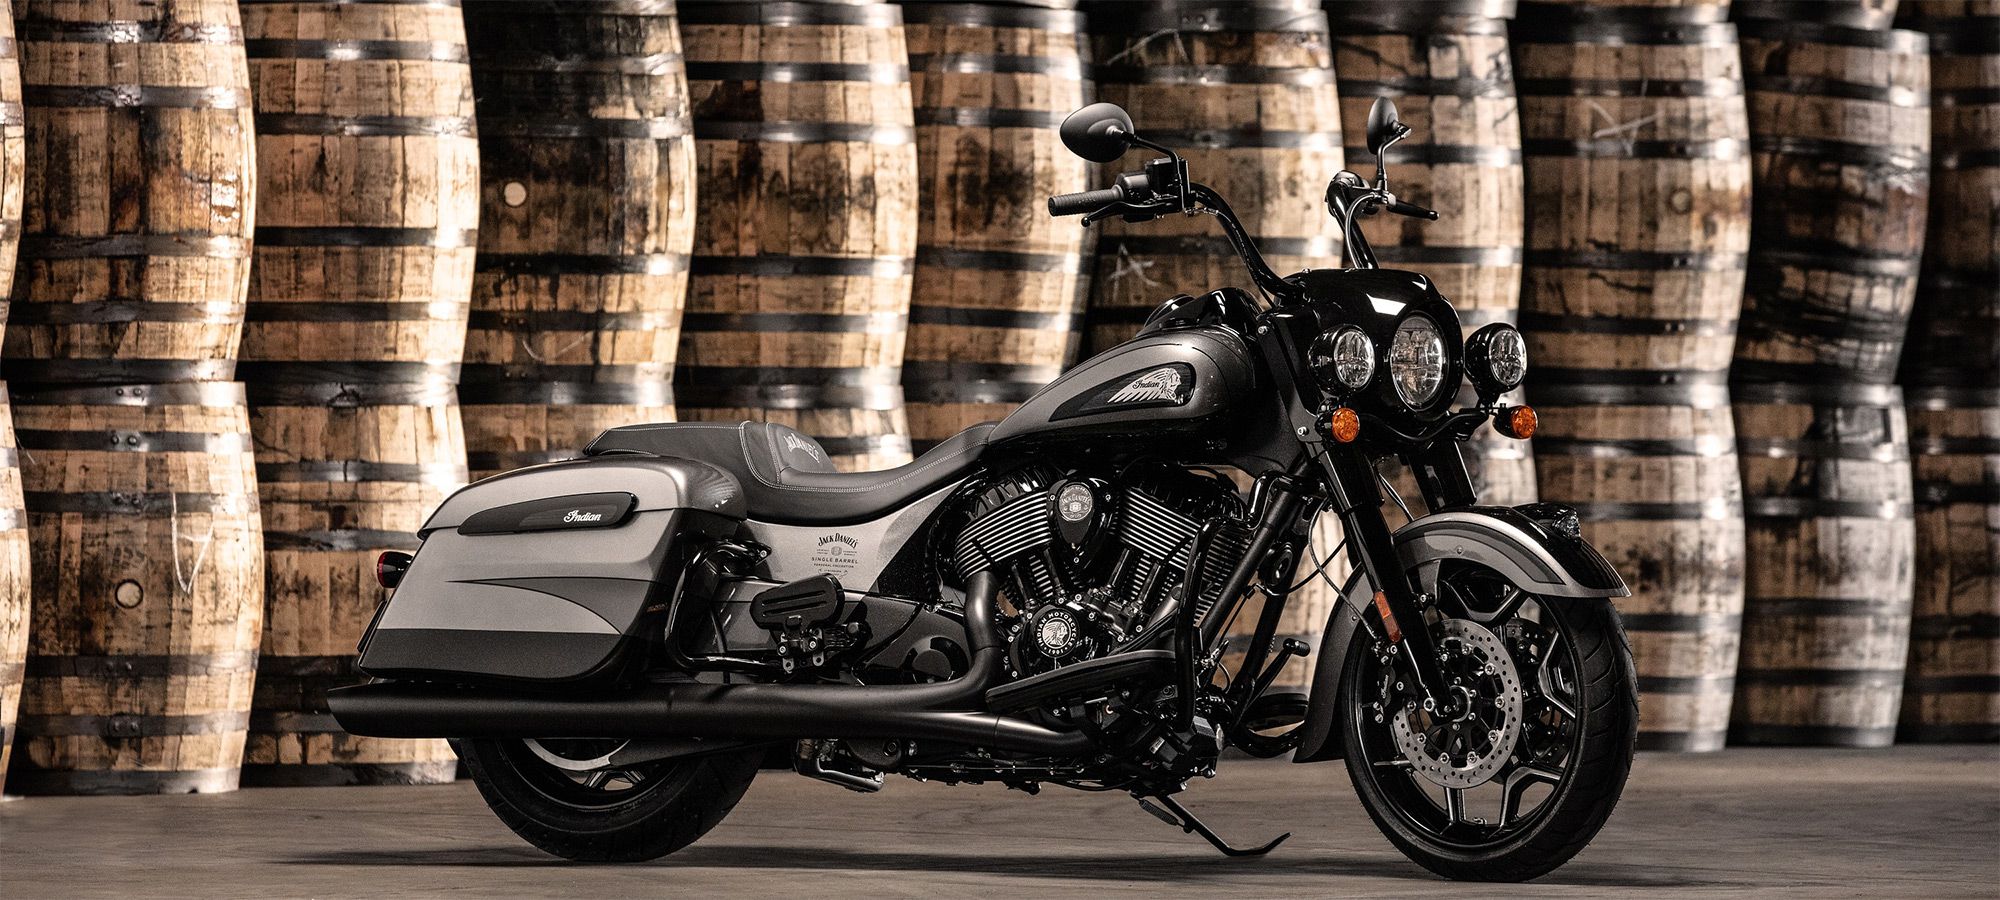 Jack Daniel S Single Barrel Select Spurs Indian Springfield Dark Horse Motorcycle Cruiser